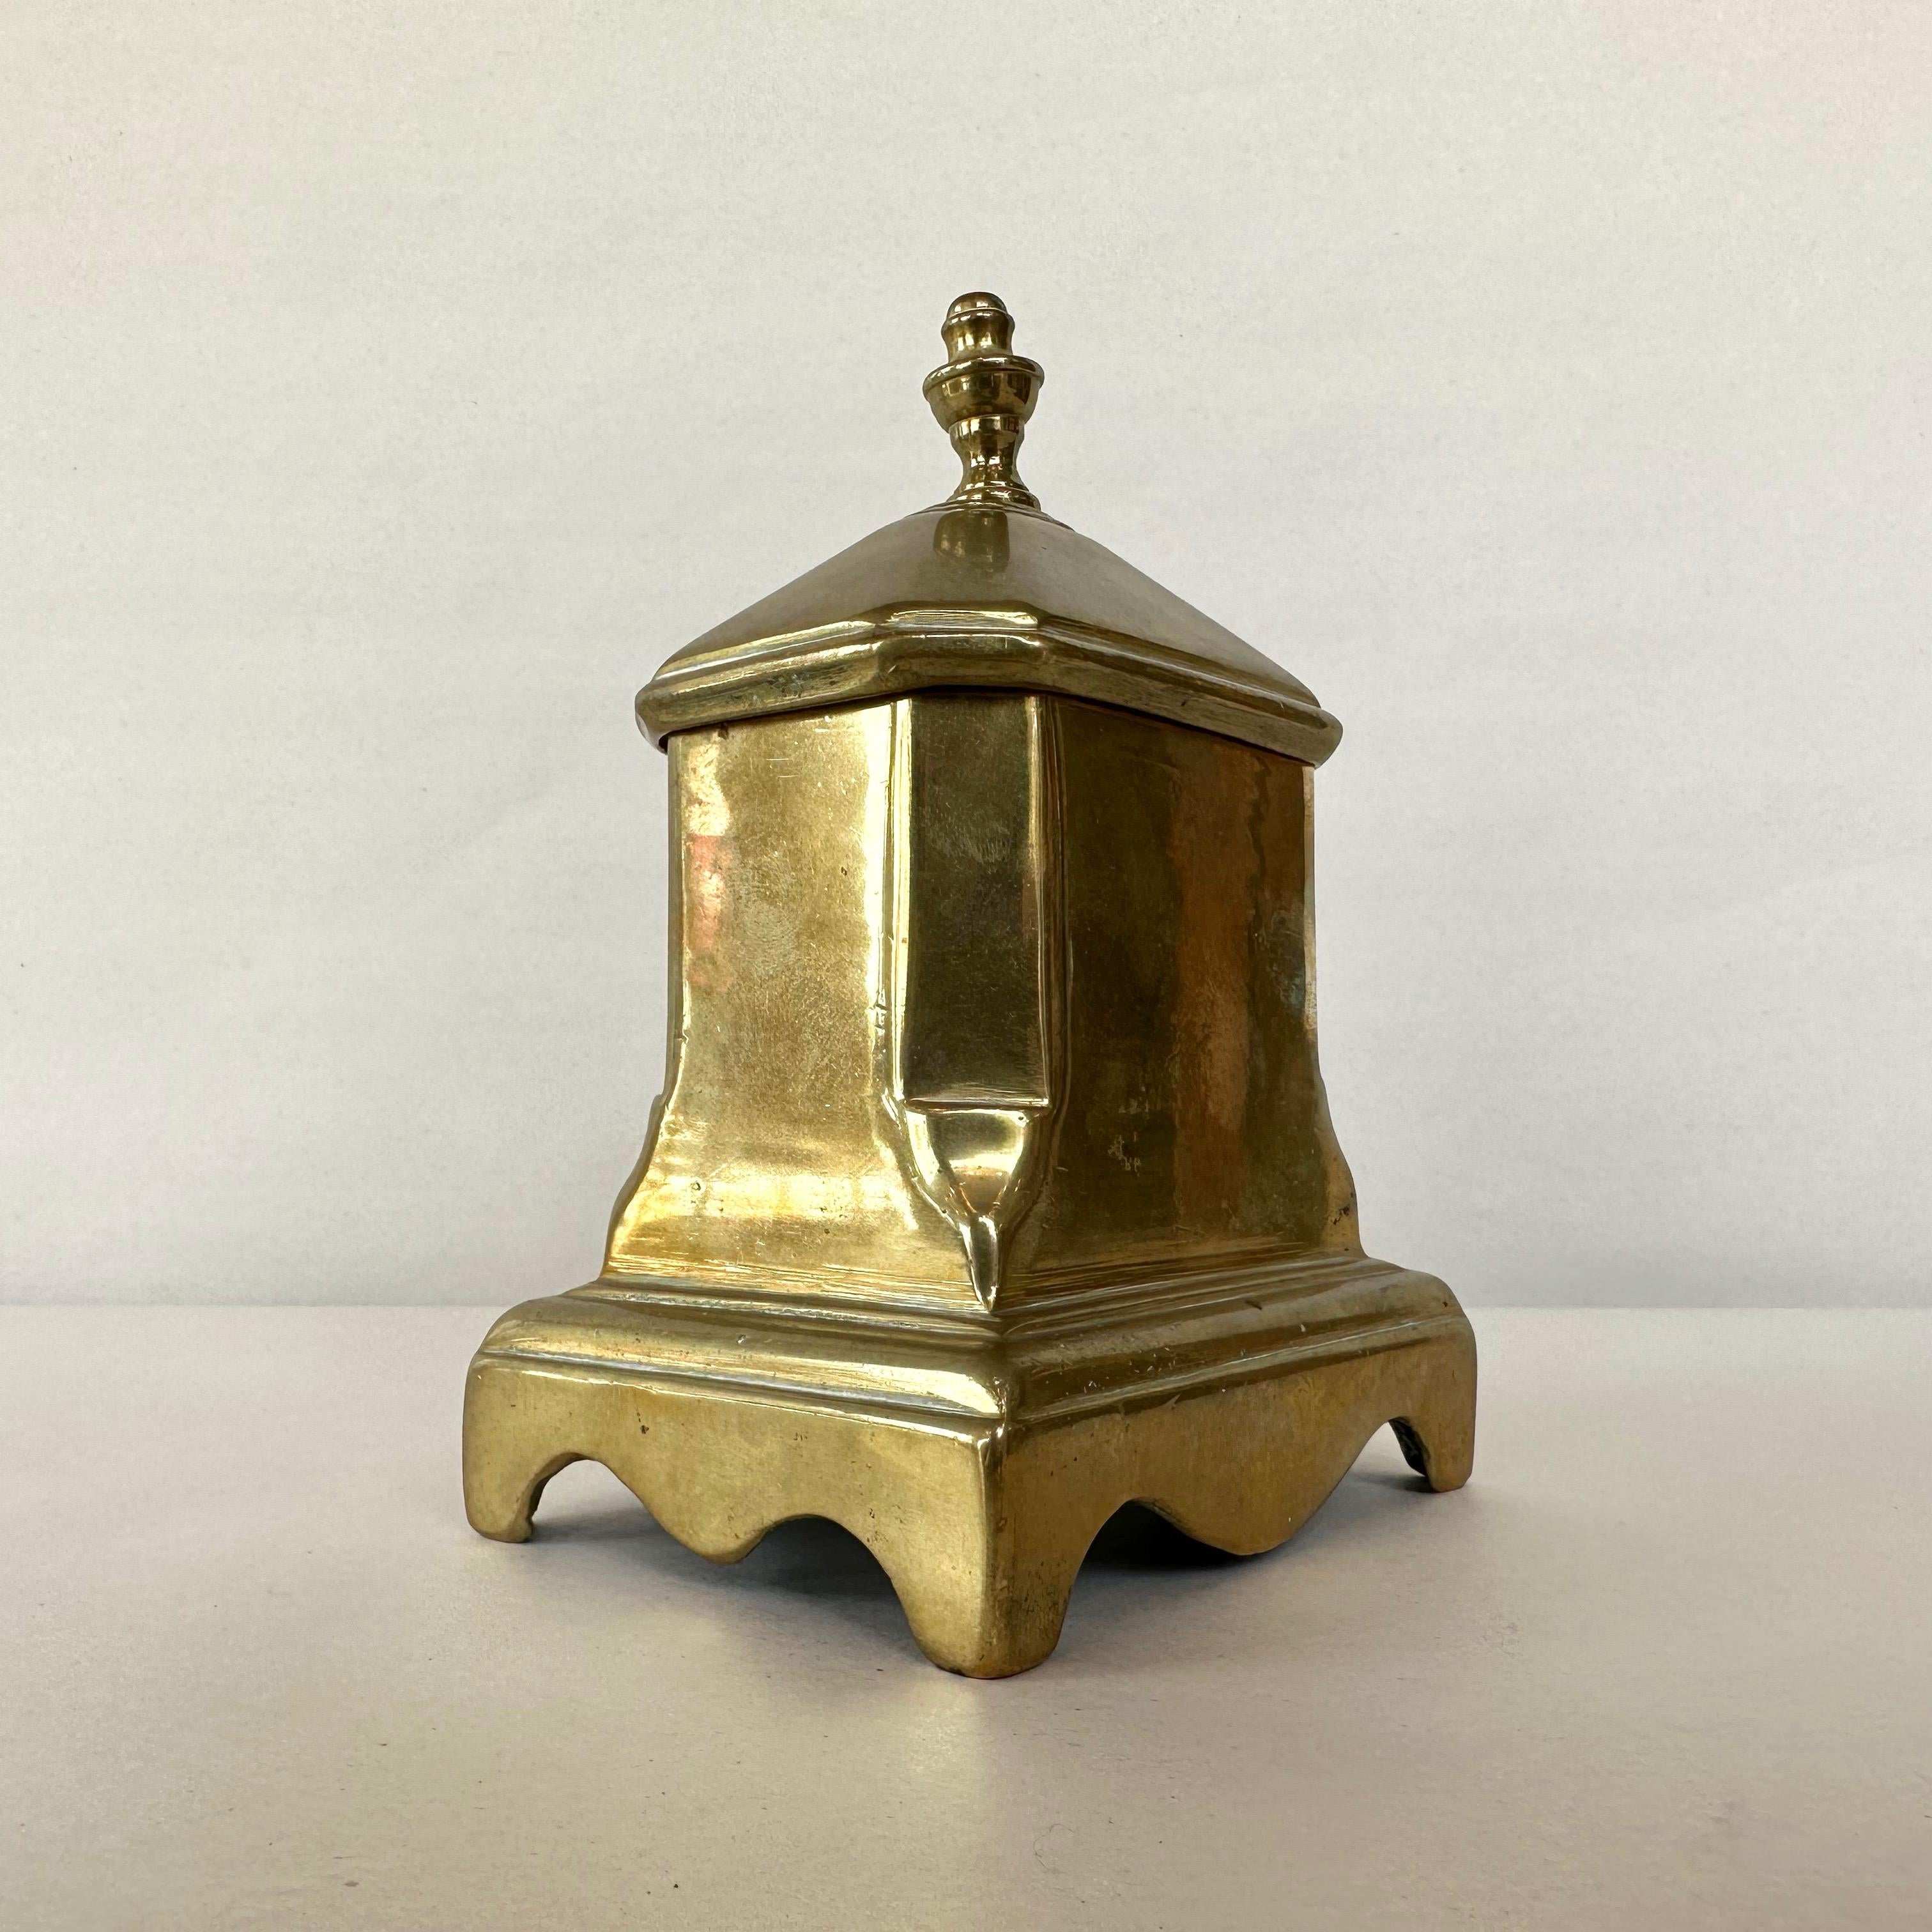 Antique American Queen Anne Period Lidded Brass Tobacco Box, circa 1750 For Sale 1